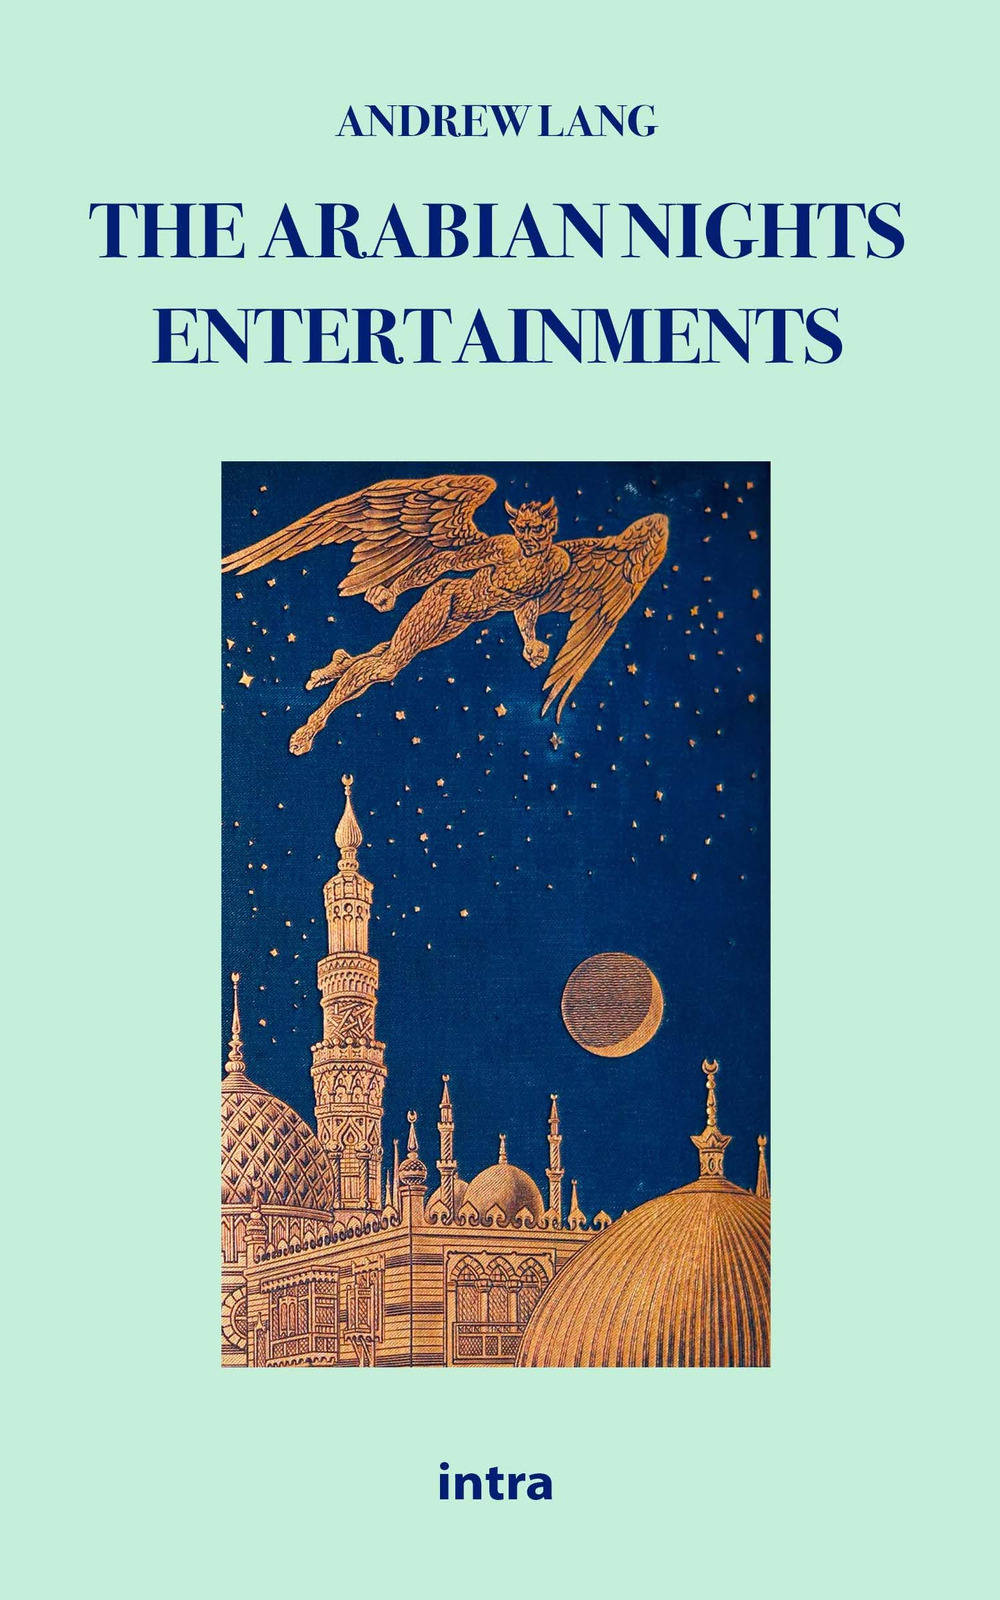 The arabian nights entertainments